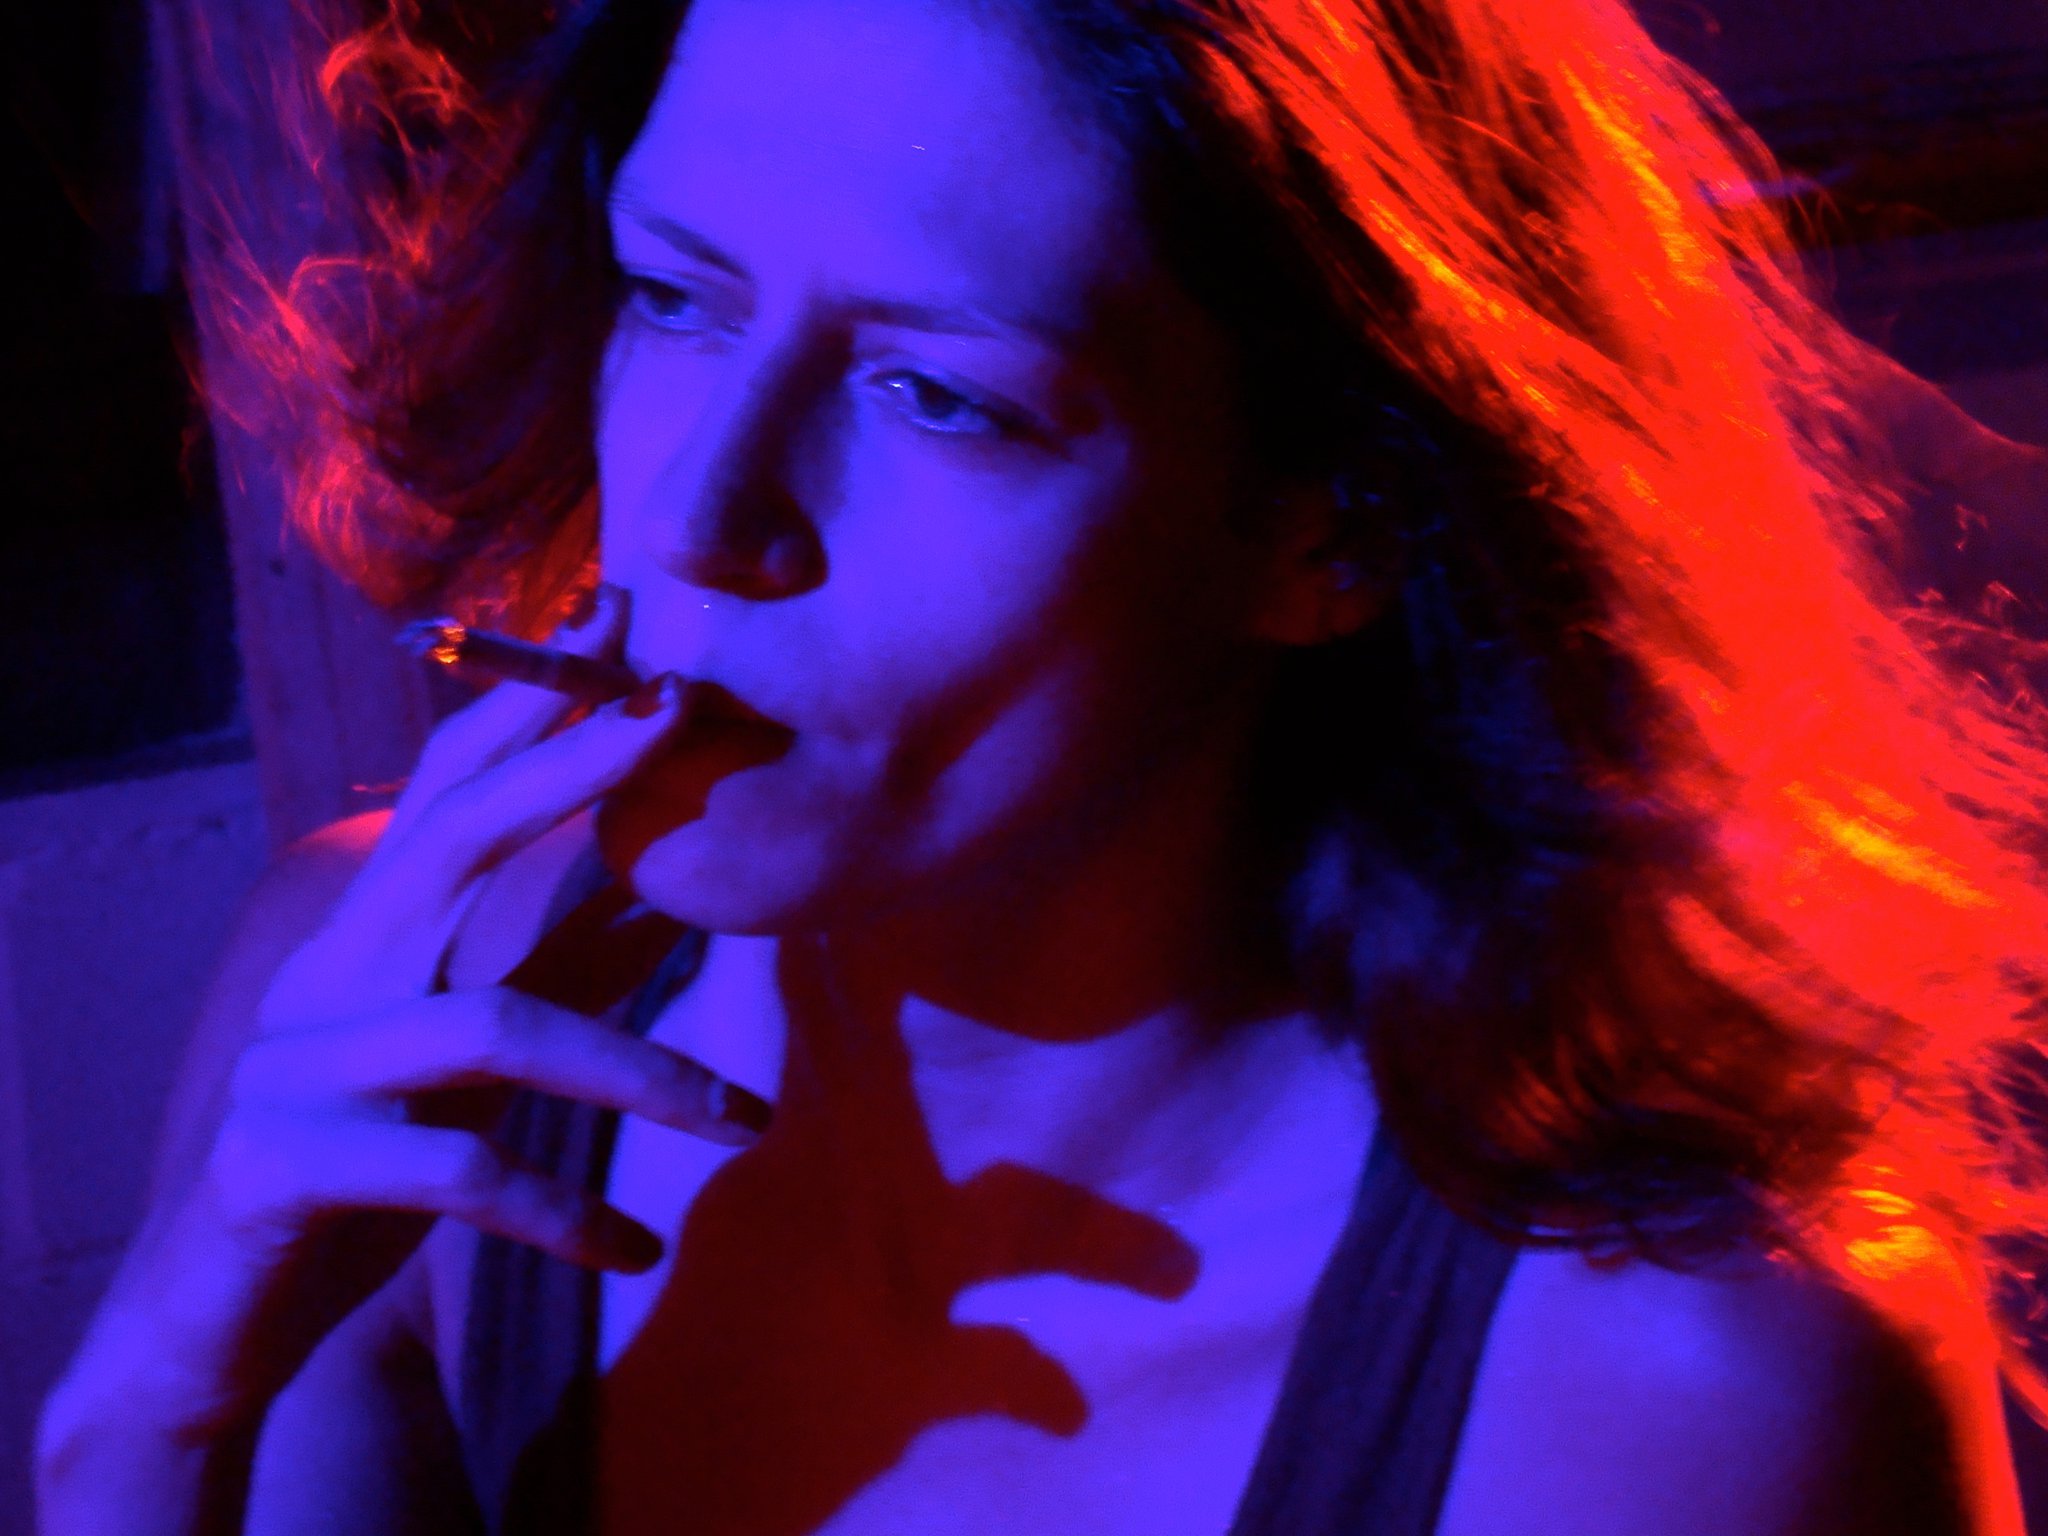 A woman smoking a cigarette. She's lit by a purple light.